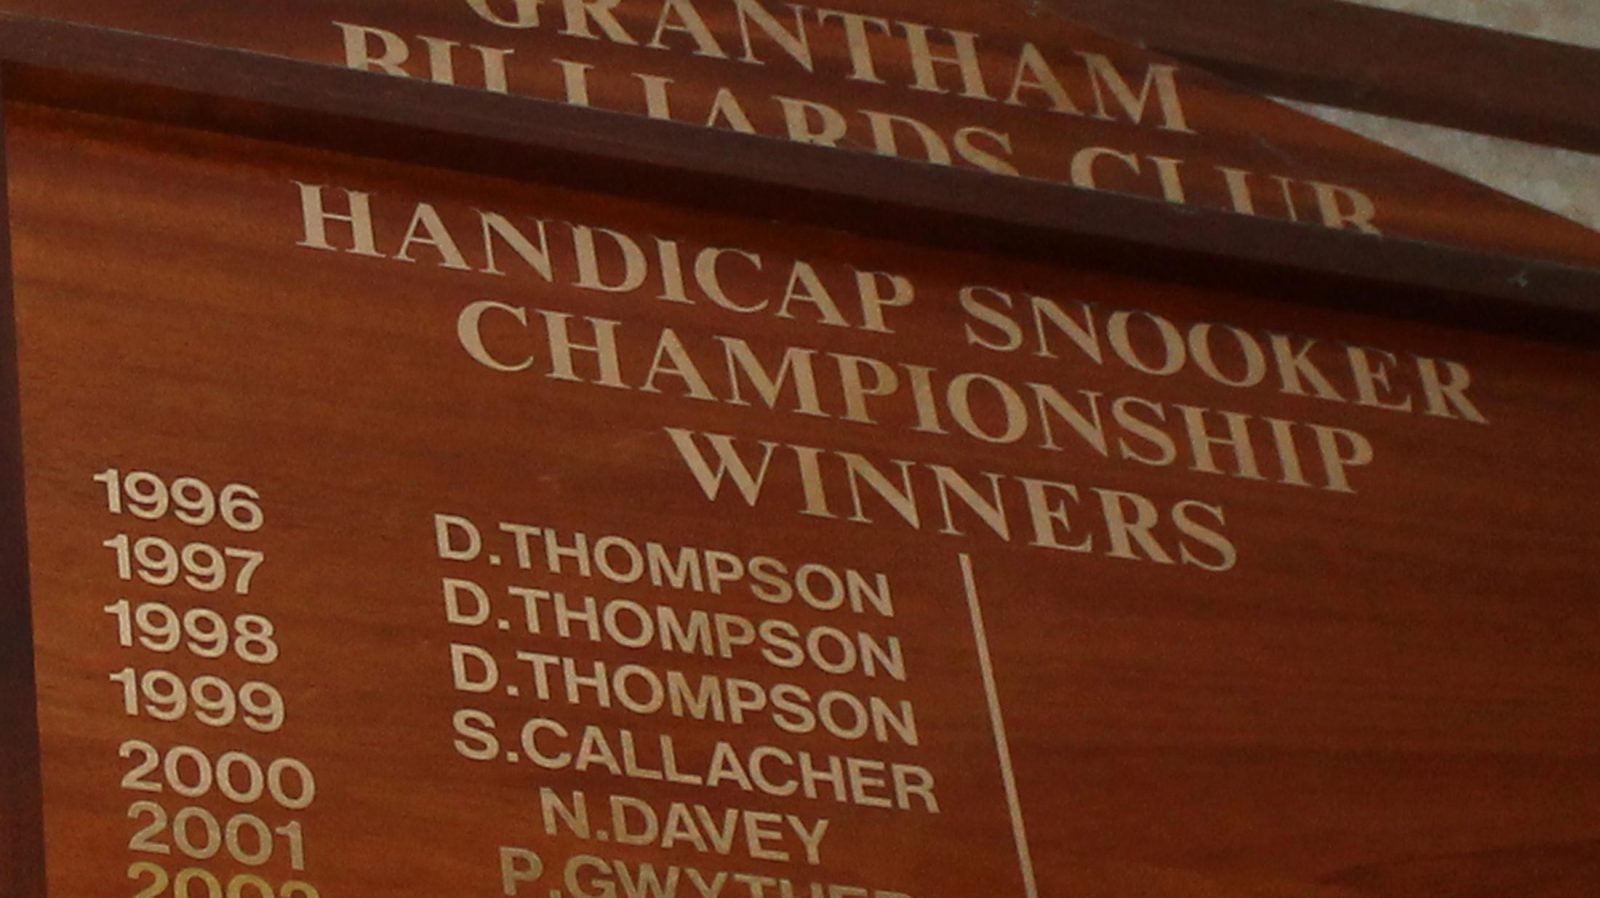 Handicap Snooker Championship Winners